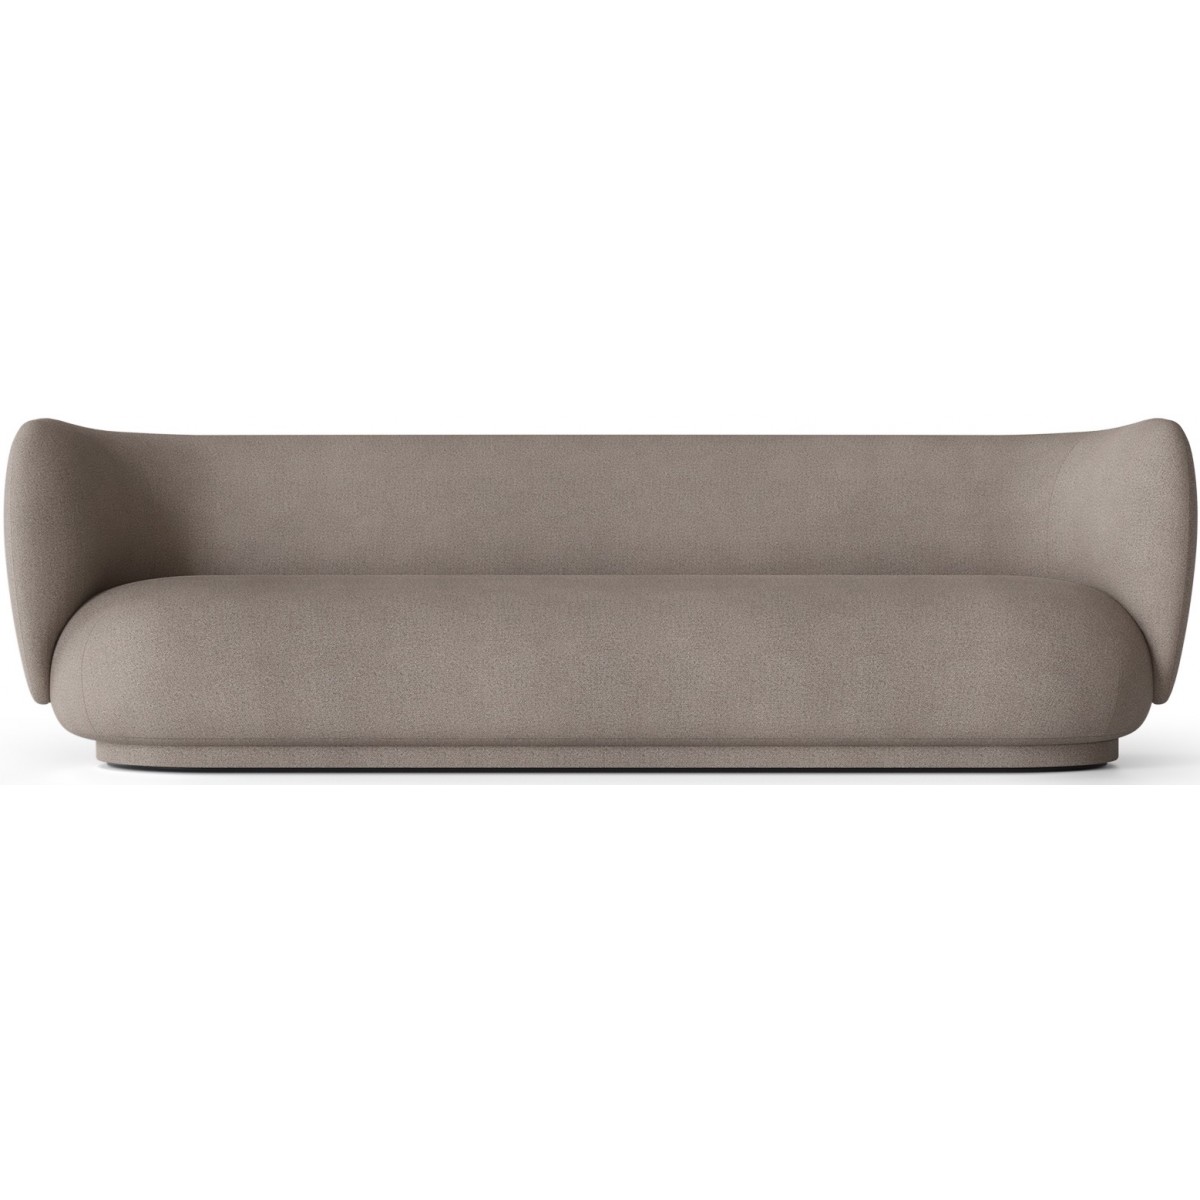 Brushed warm grey fabric - Rico 4-seater sofa